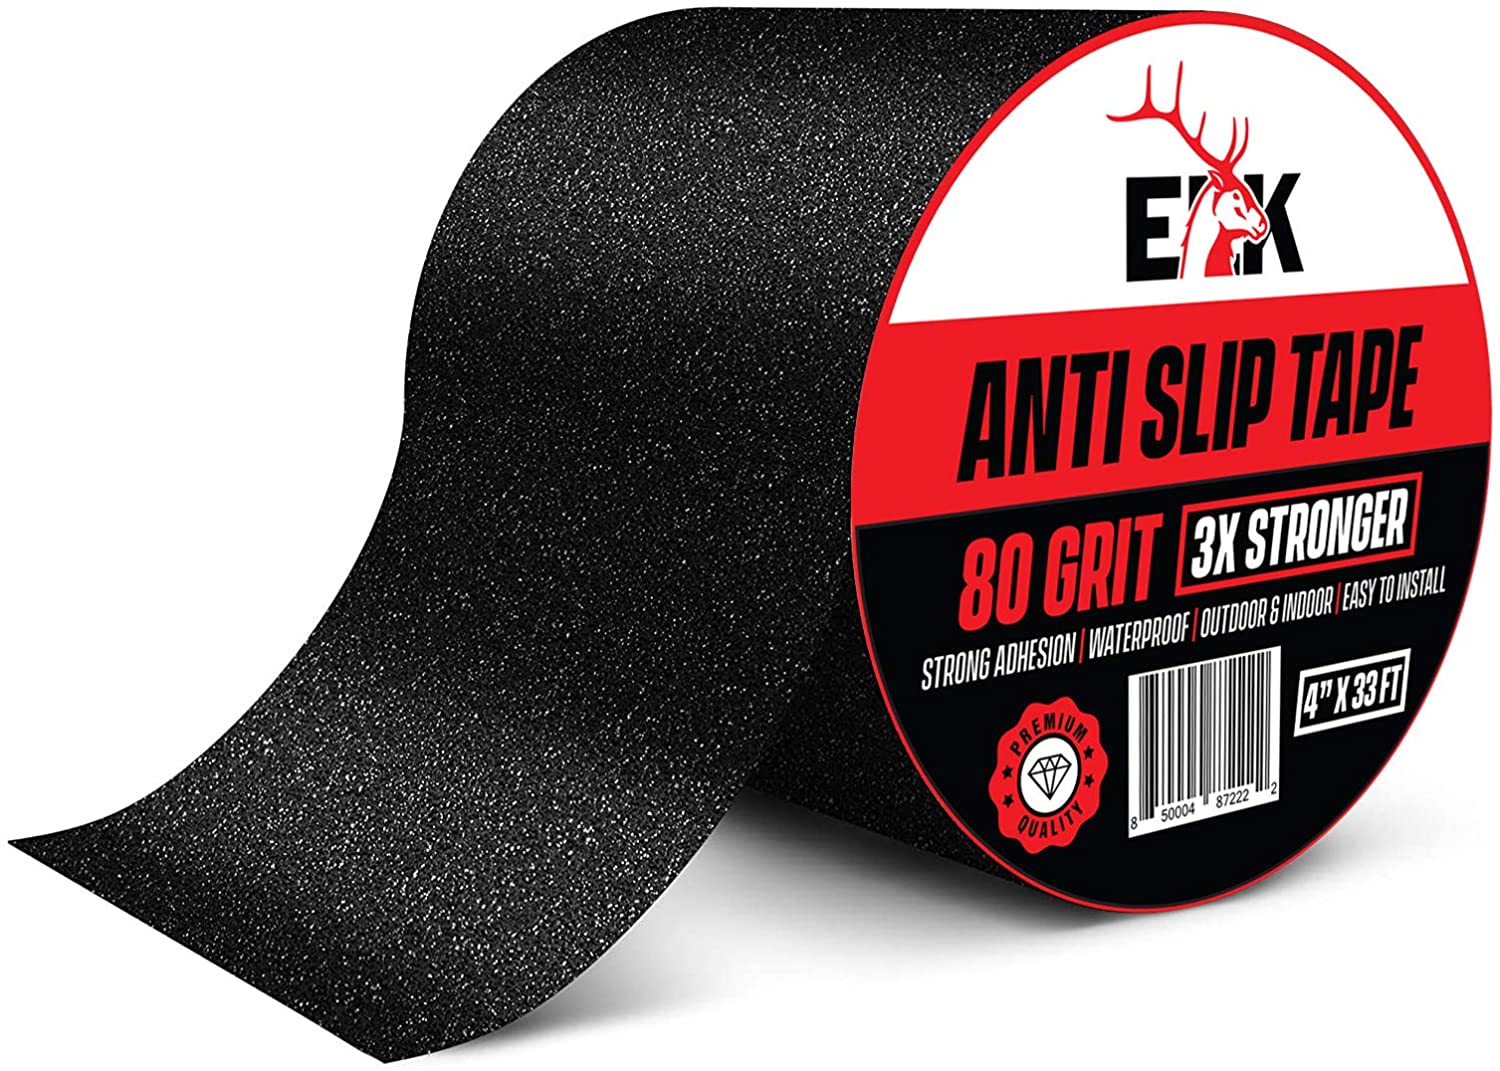 4" x 33' Anti Slip Non Skid Tape Grip Self Adhesive Clear Stripe Safety Flooring 